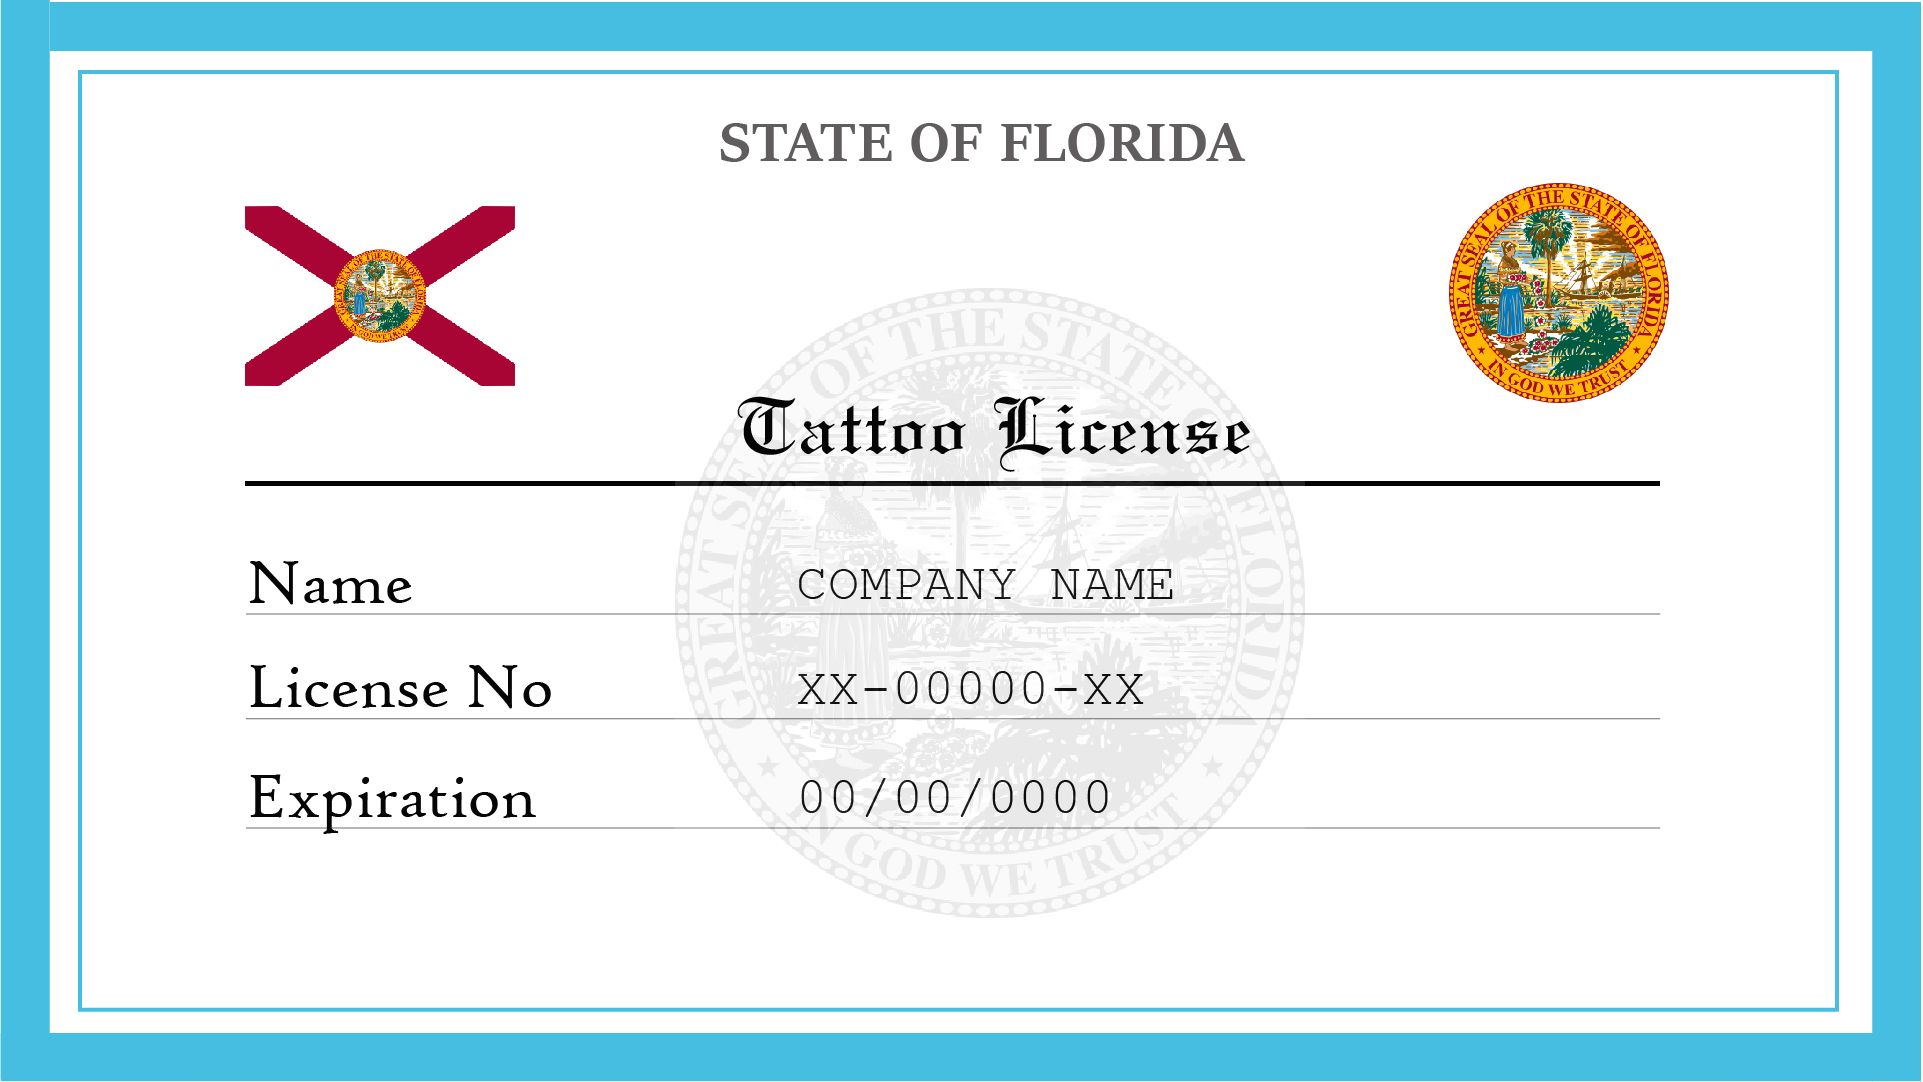 Tattoo license lookup florida